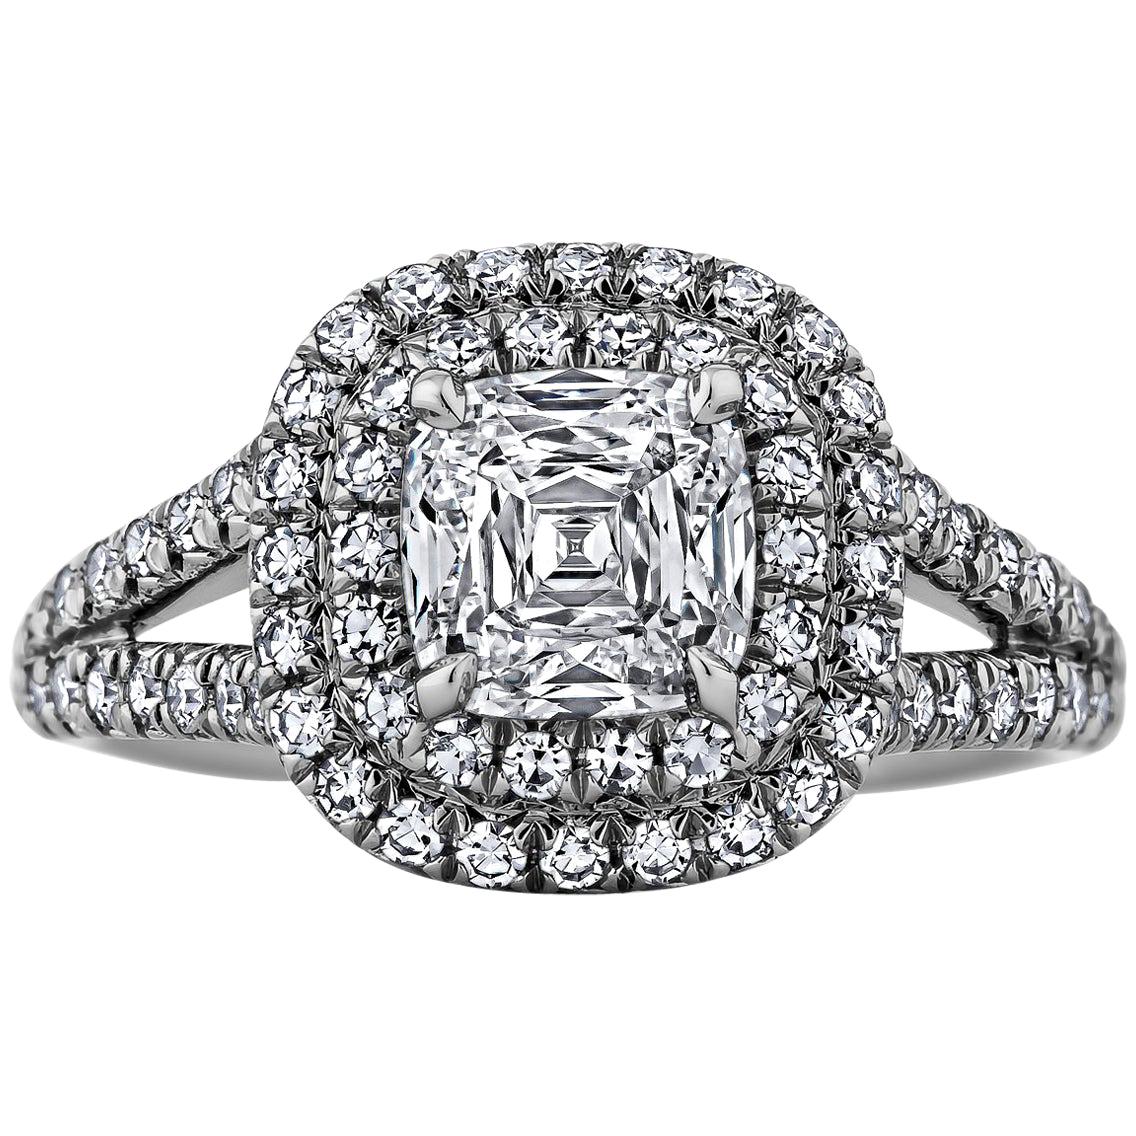 Cushion Cut 1.35 Carat Diamond Platinum Engagement Ring